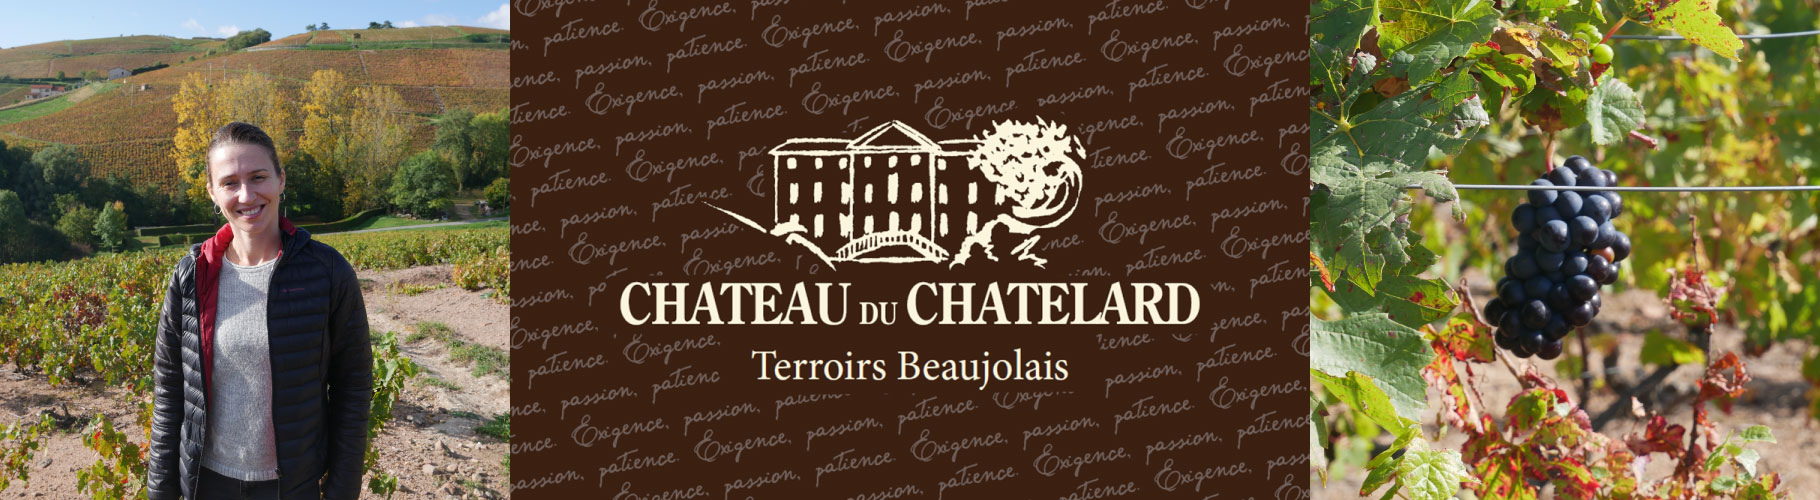 CHATEAU DU CHATELARD Terroirs Beaujolais